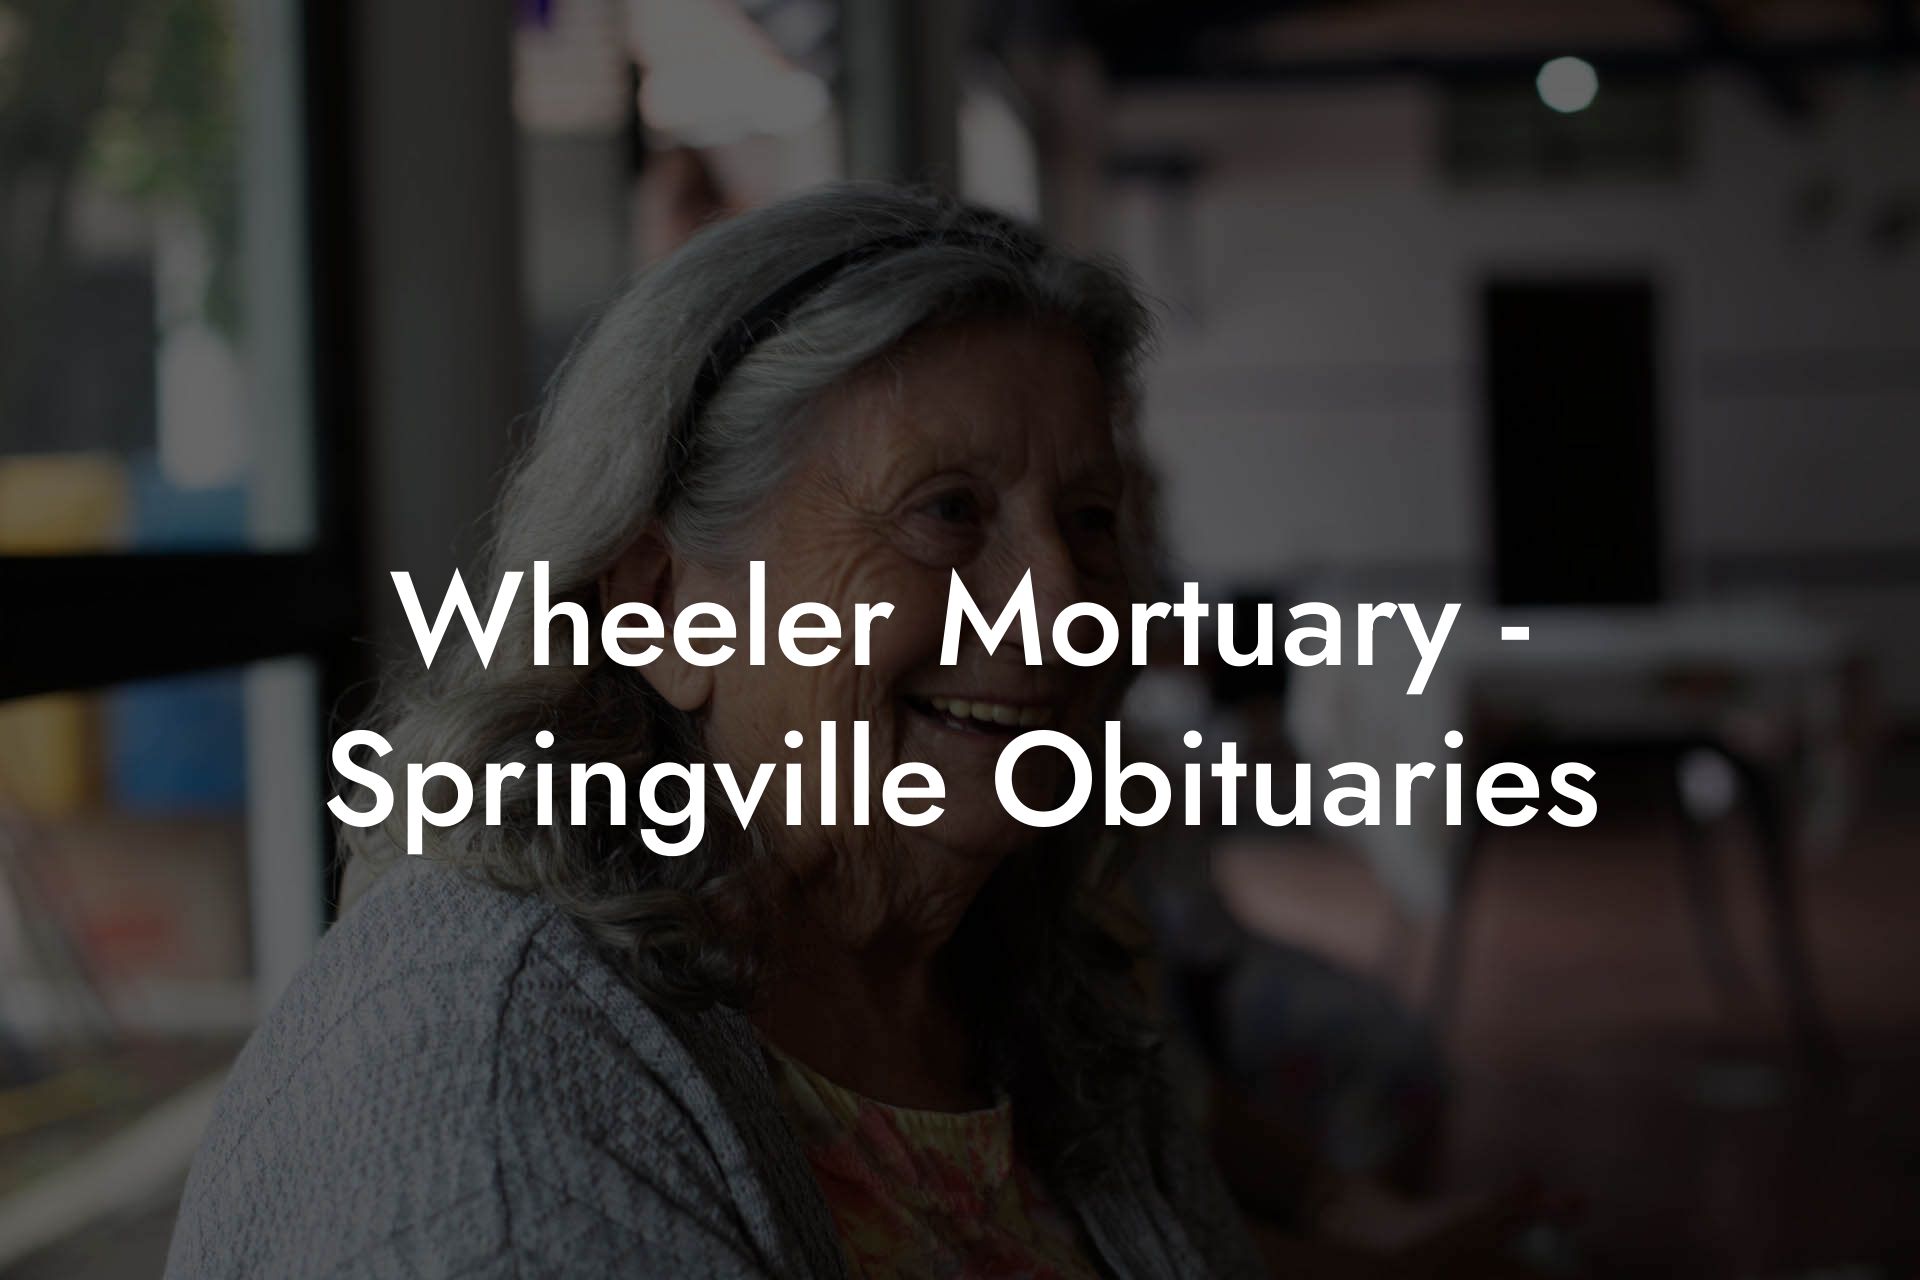 Wheeler Mortuary - Springville Obituaries